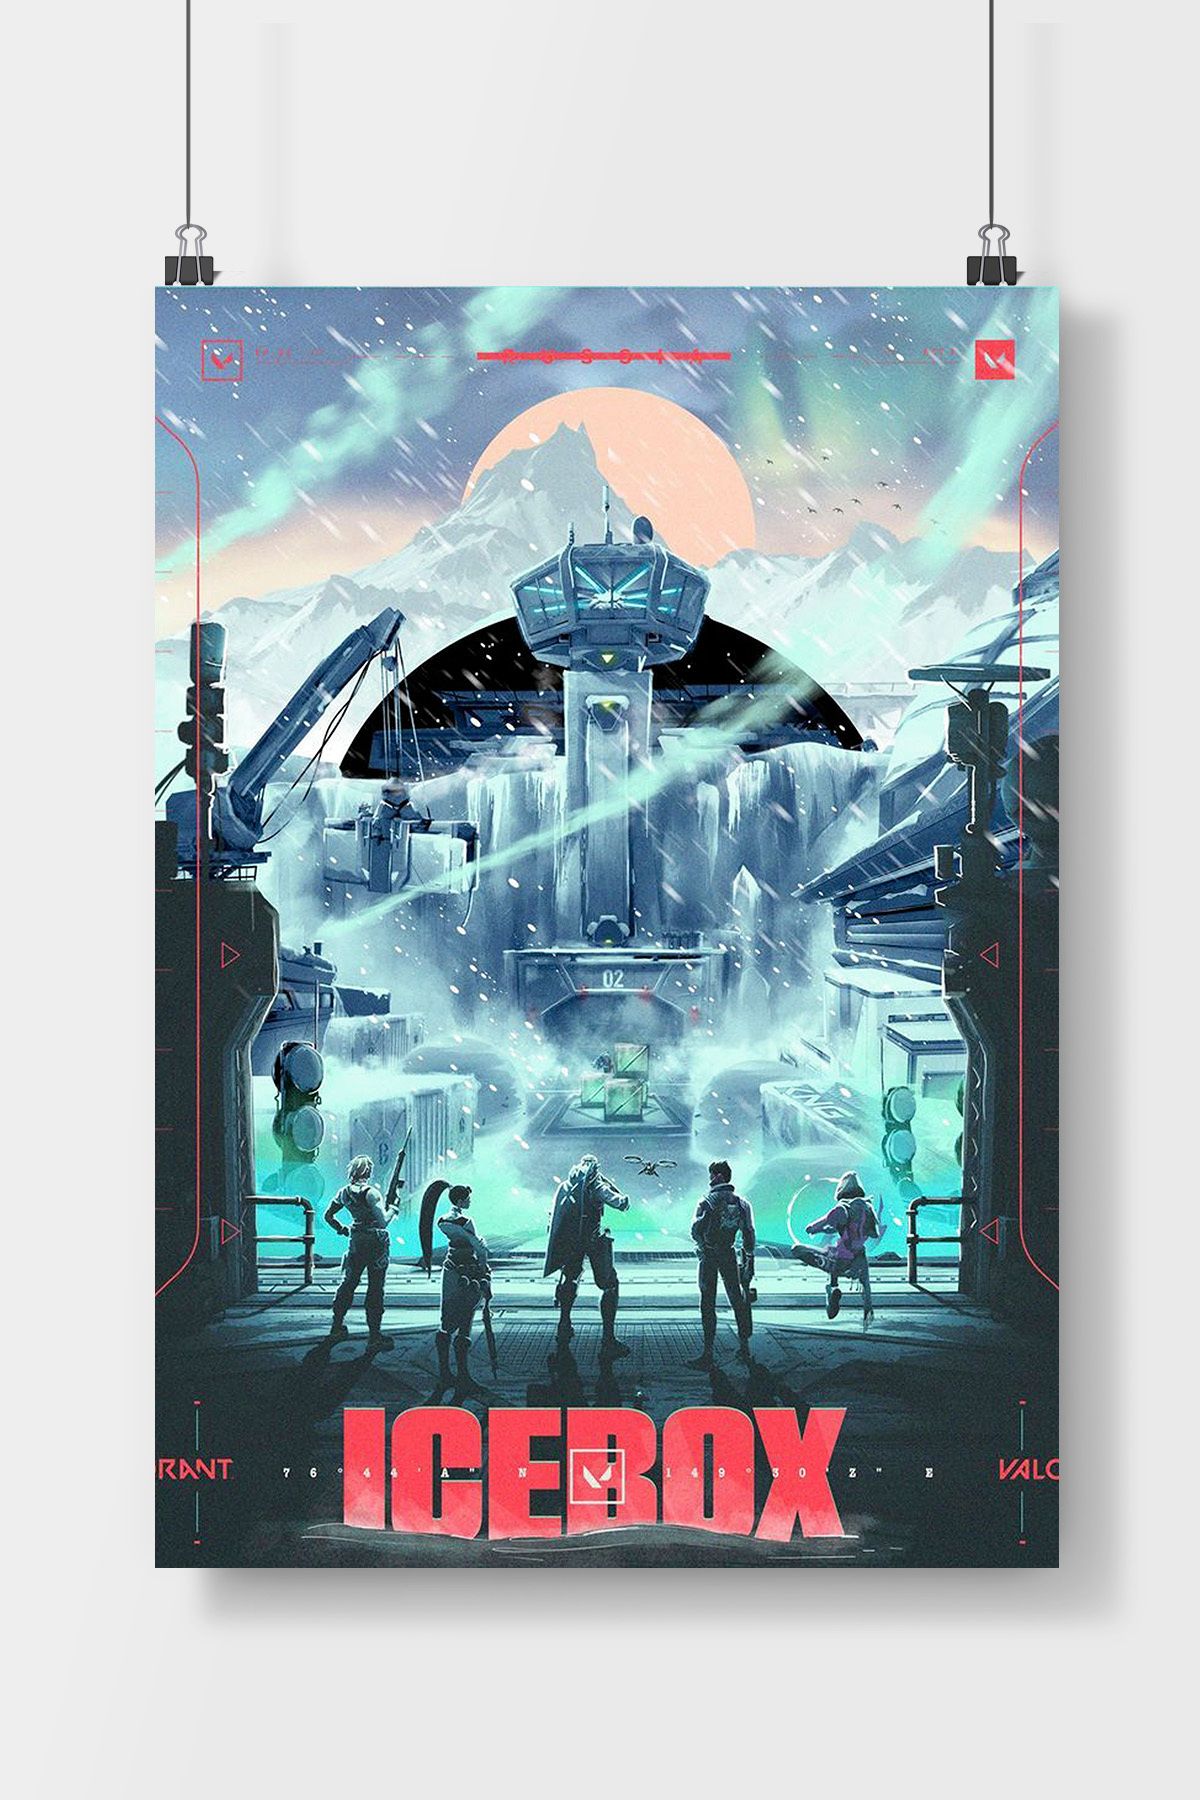 TREND Valorant Icebox Oyun Poster Çerçevesiz Parlak Kağıt